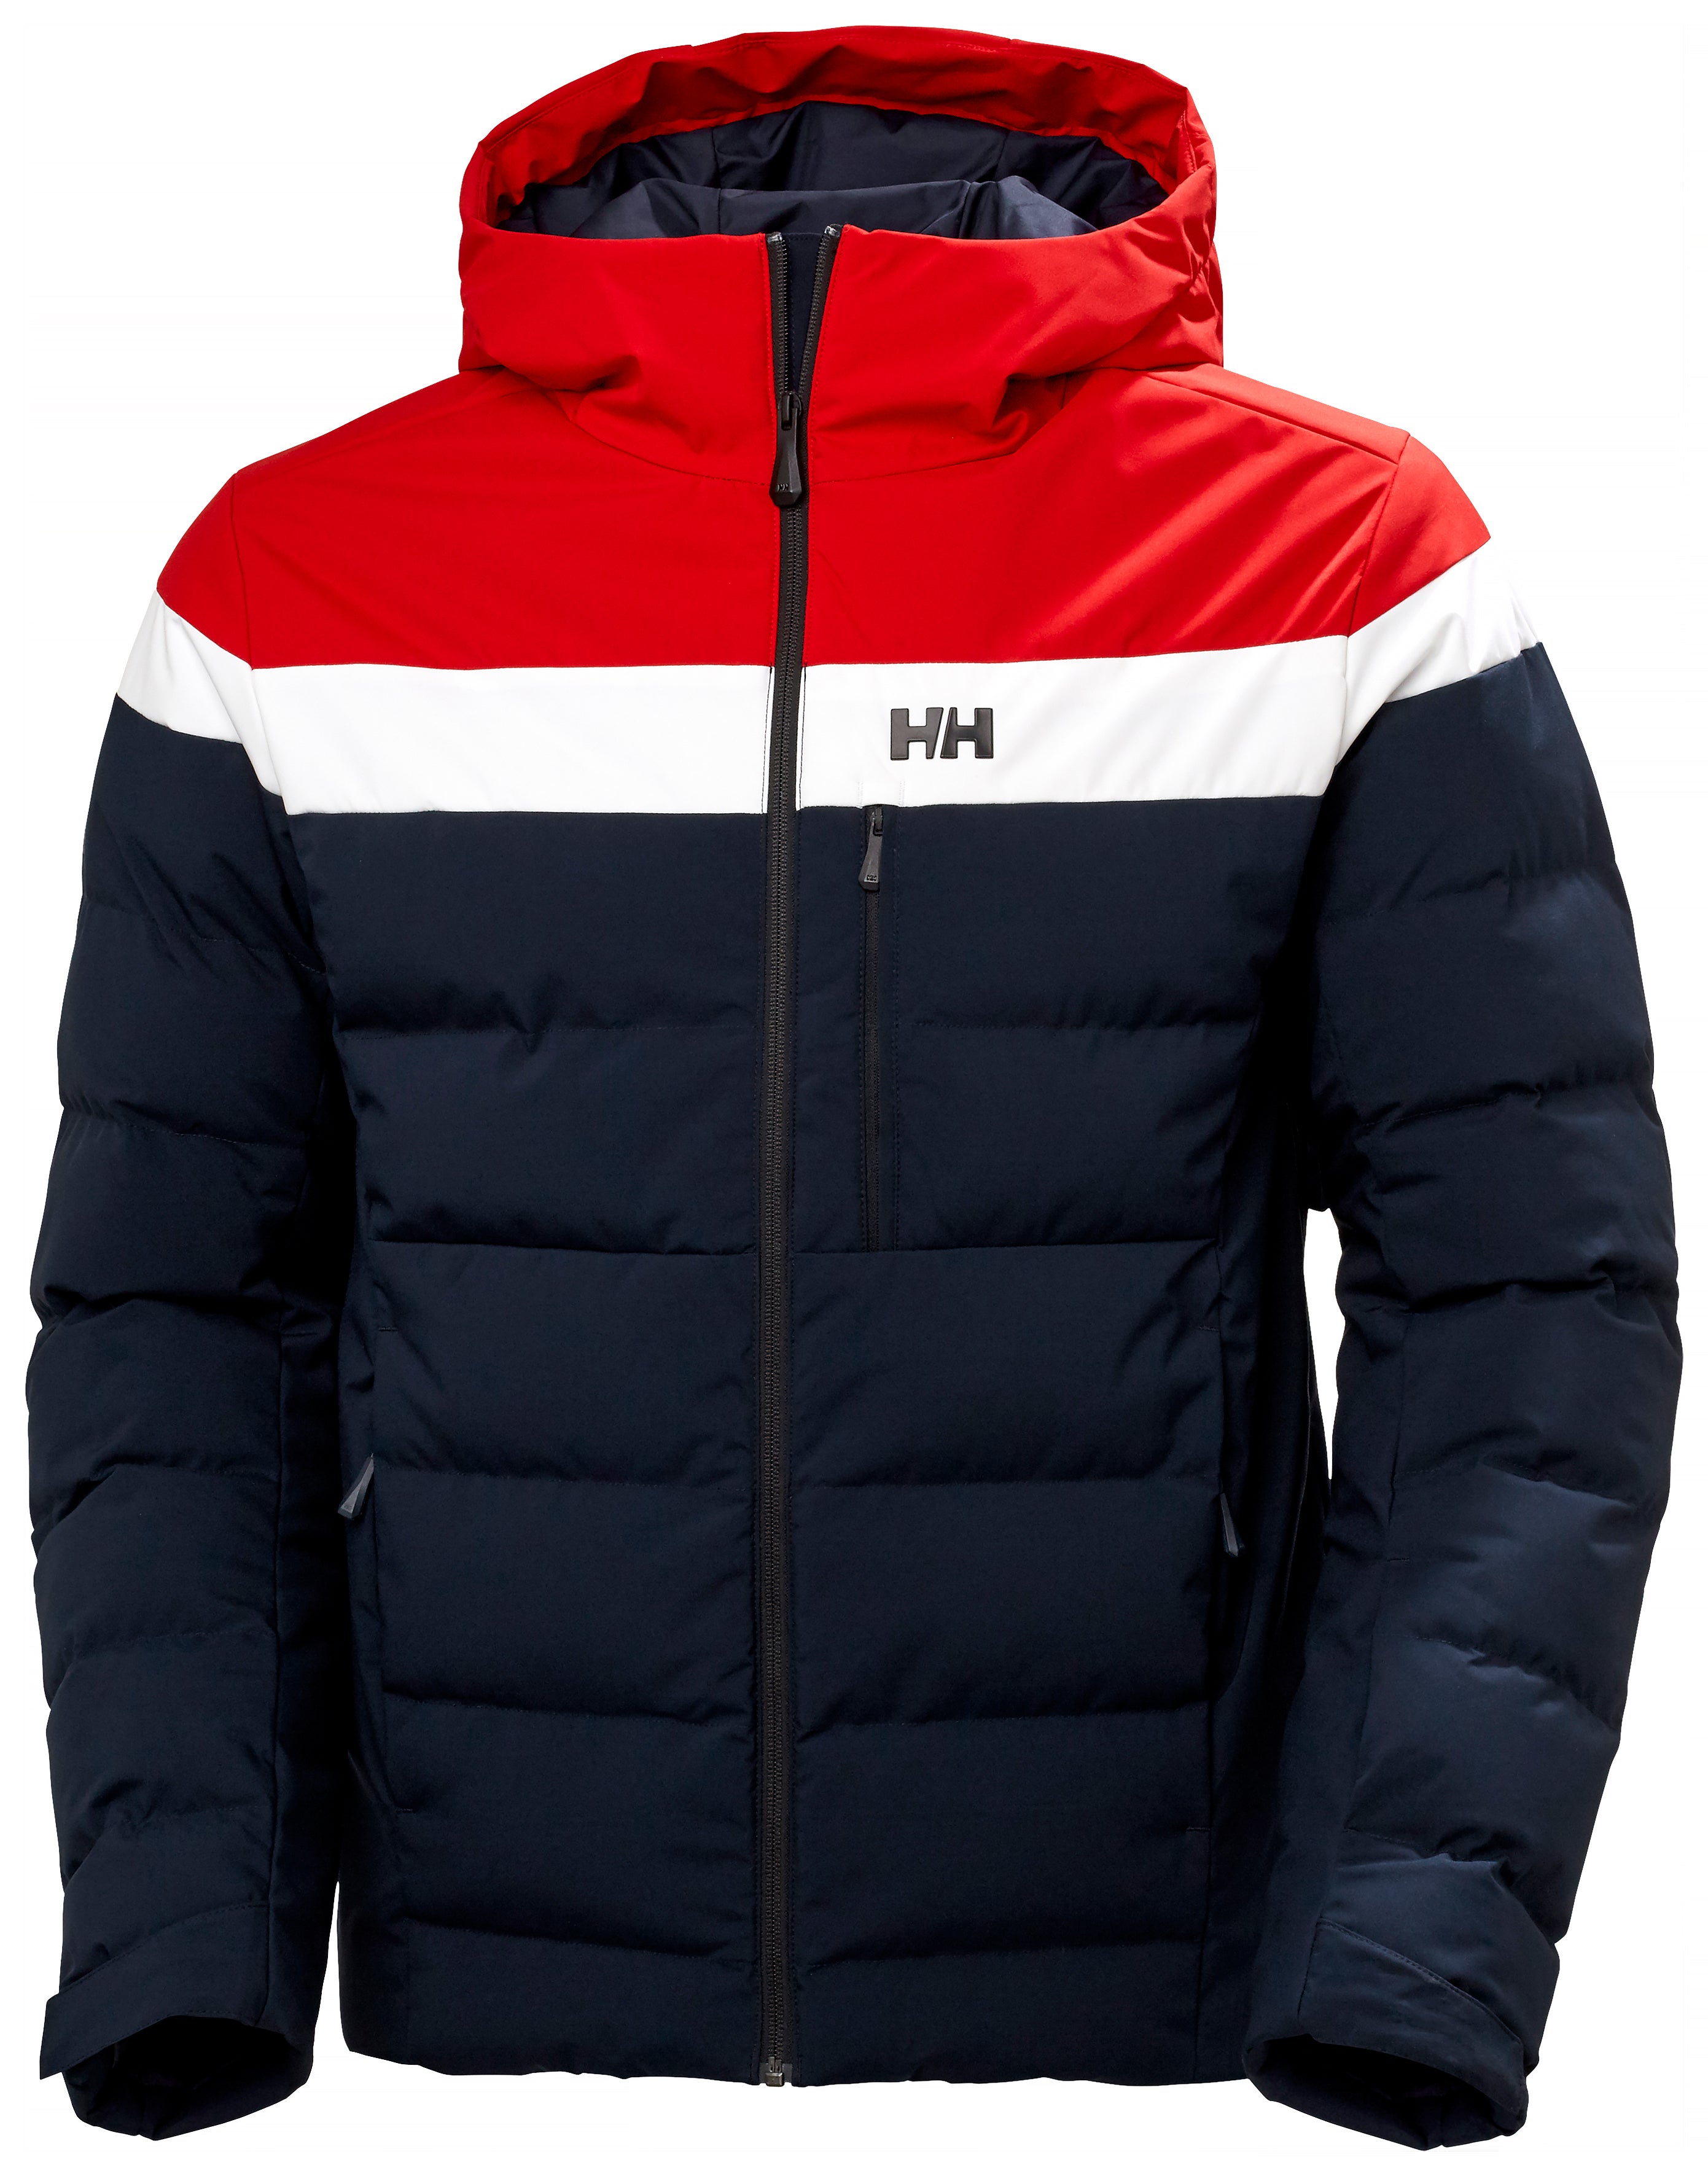 Bossanova Puffy Ski Jacket for Men